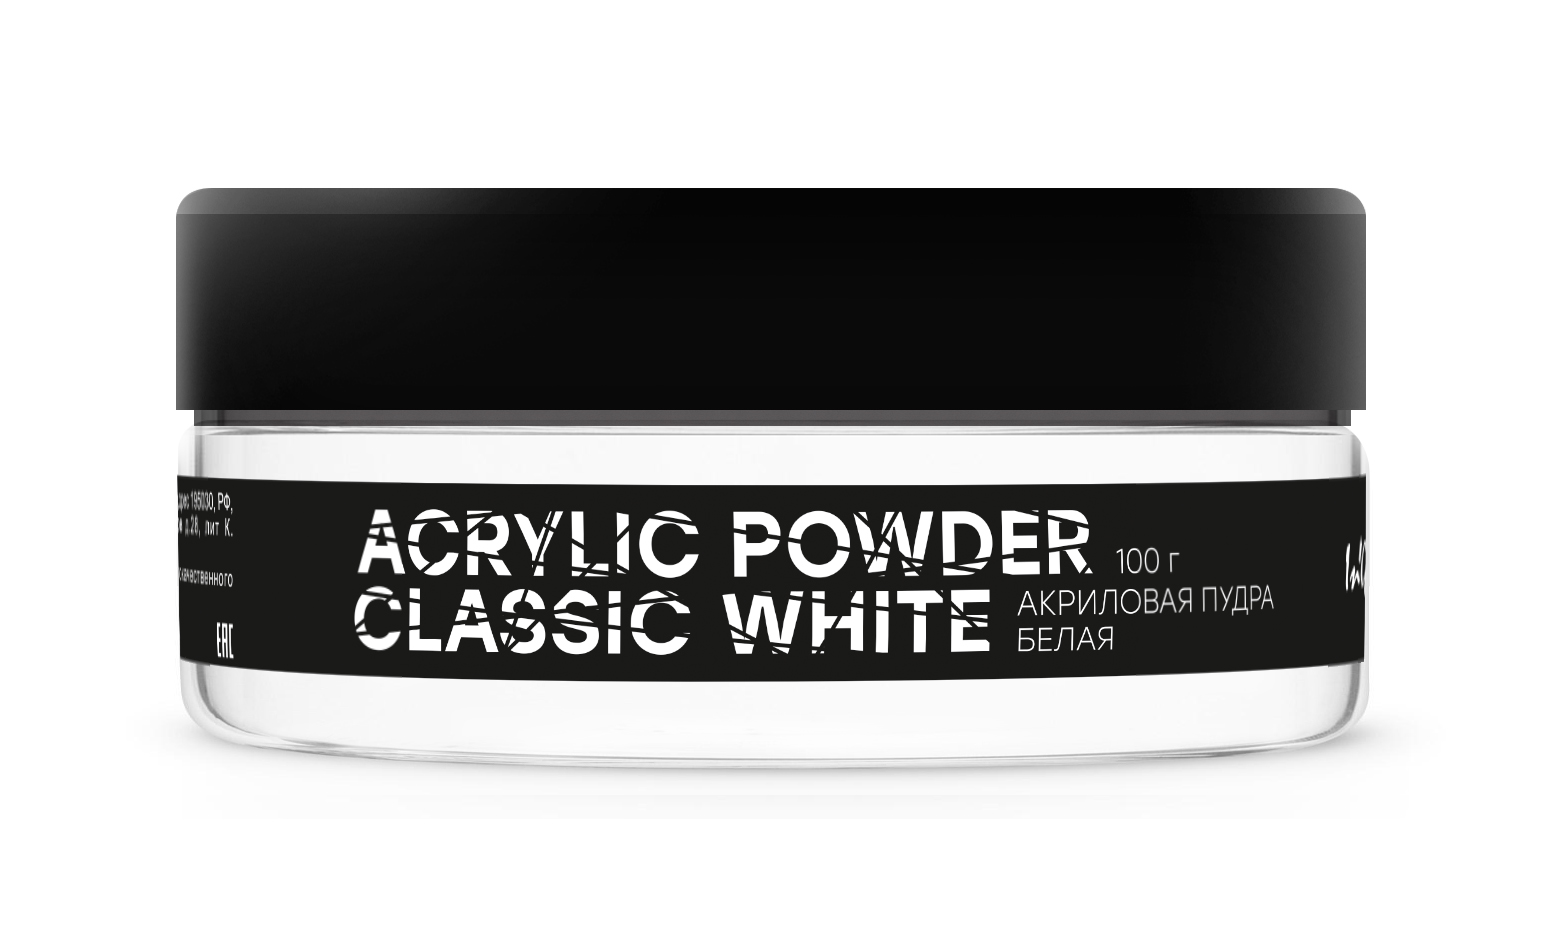 Акриловая пудра белая Acrylic Powder Classic White, 100 г акриловая пудра elpaza acrylic powder розовая 15 г